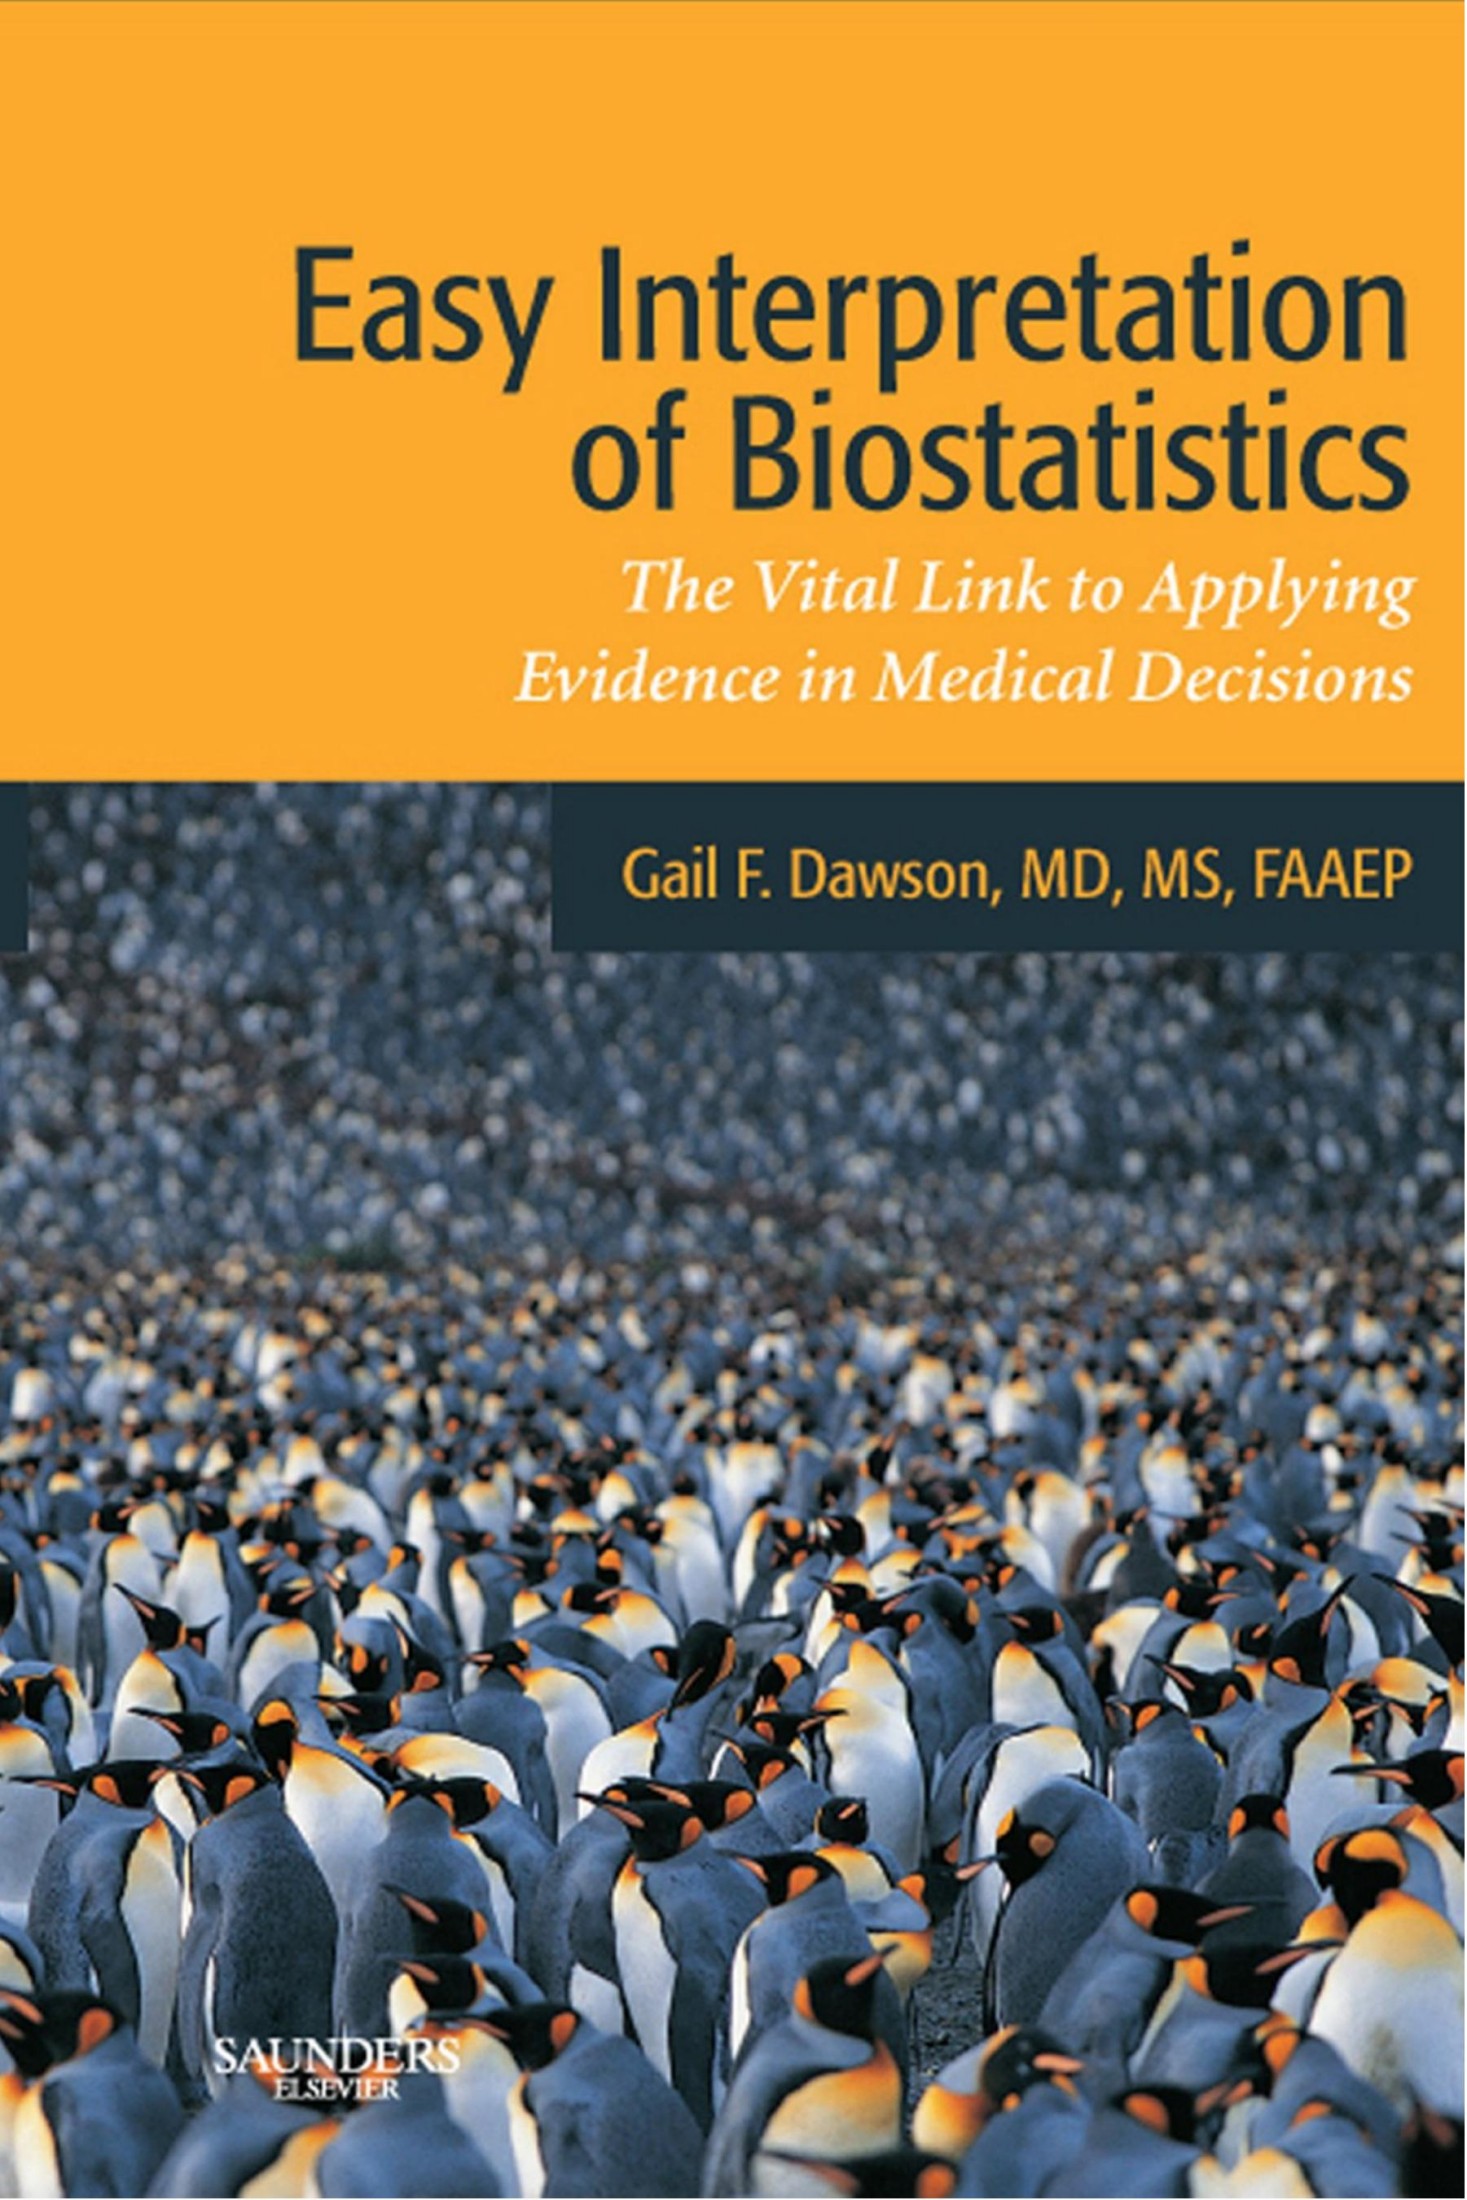 Easy Interpretation of Biostatistics The Vital Link to Applying Evidence in Medical Decisions.jpg